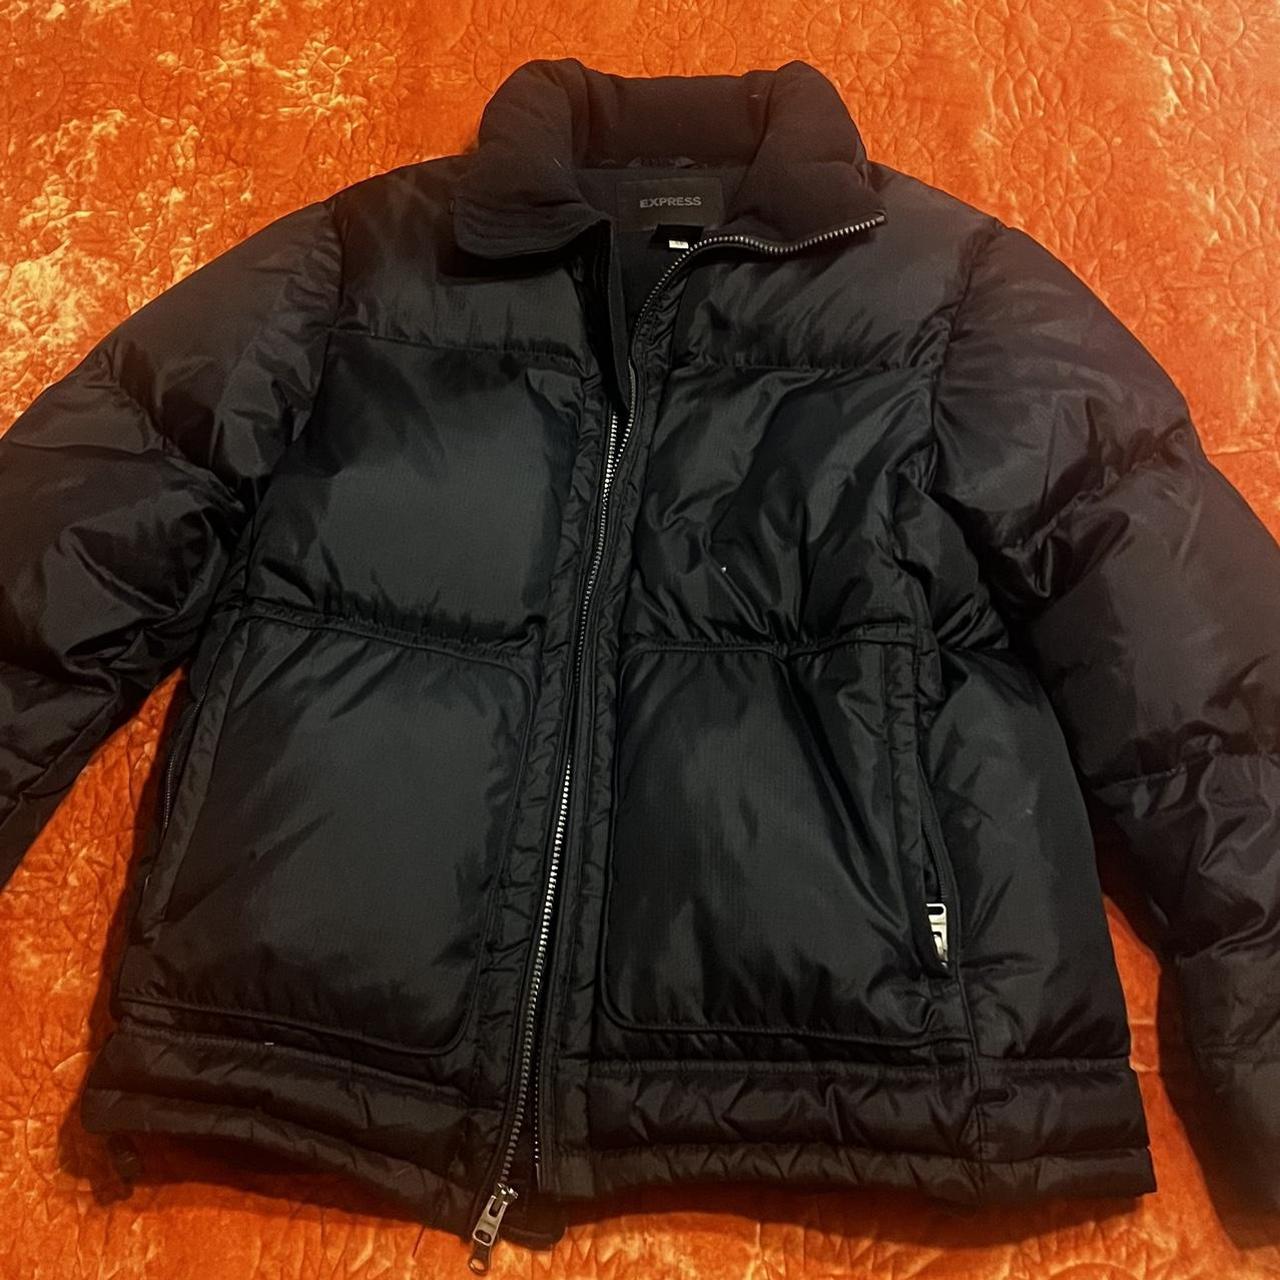 Express men’s vintage black puffer jacket! This... - Depop